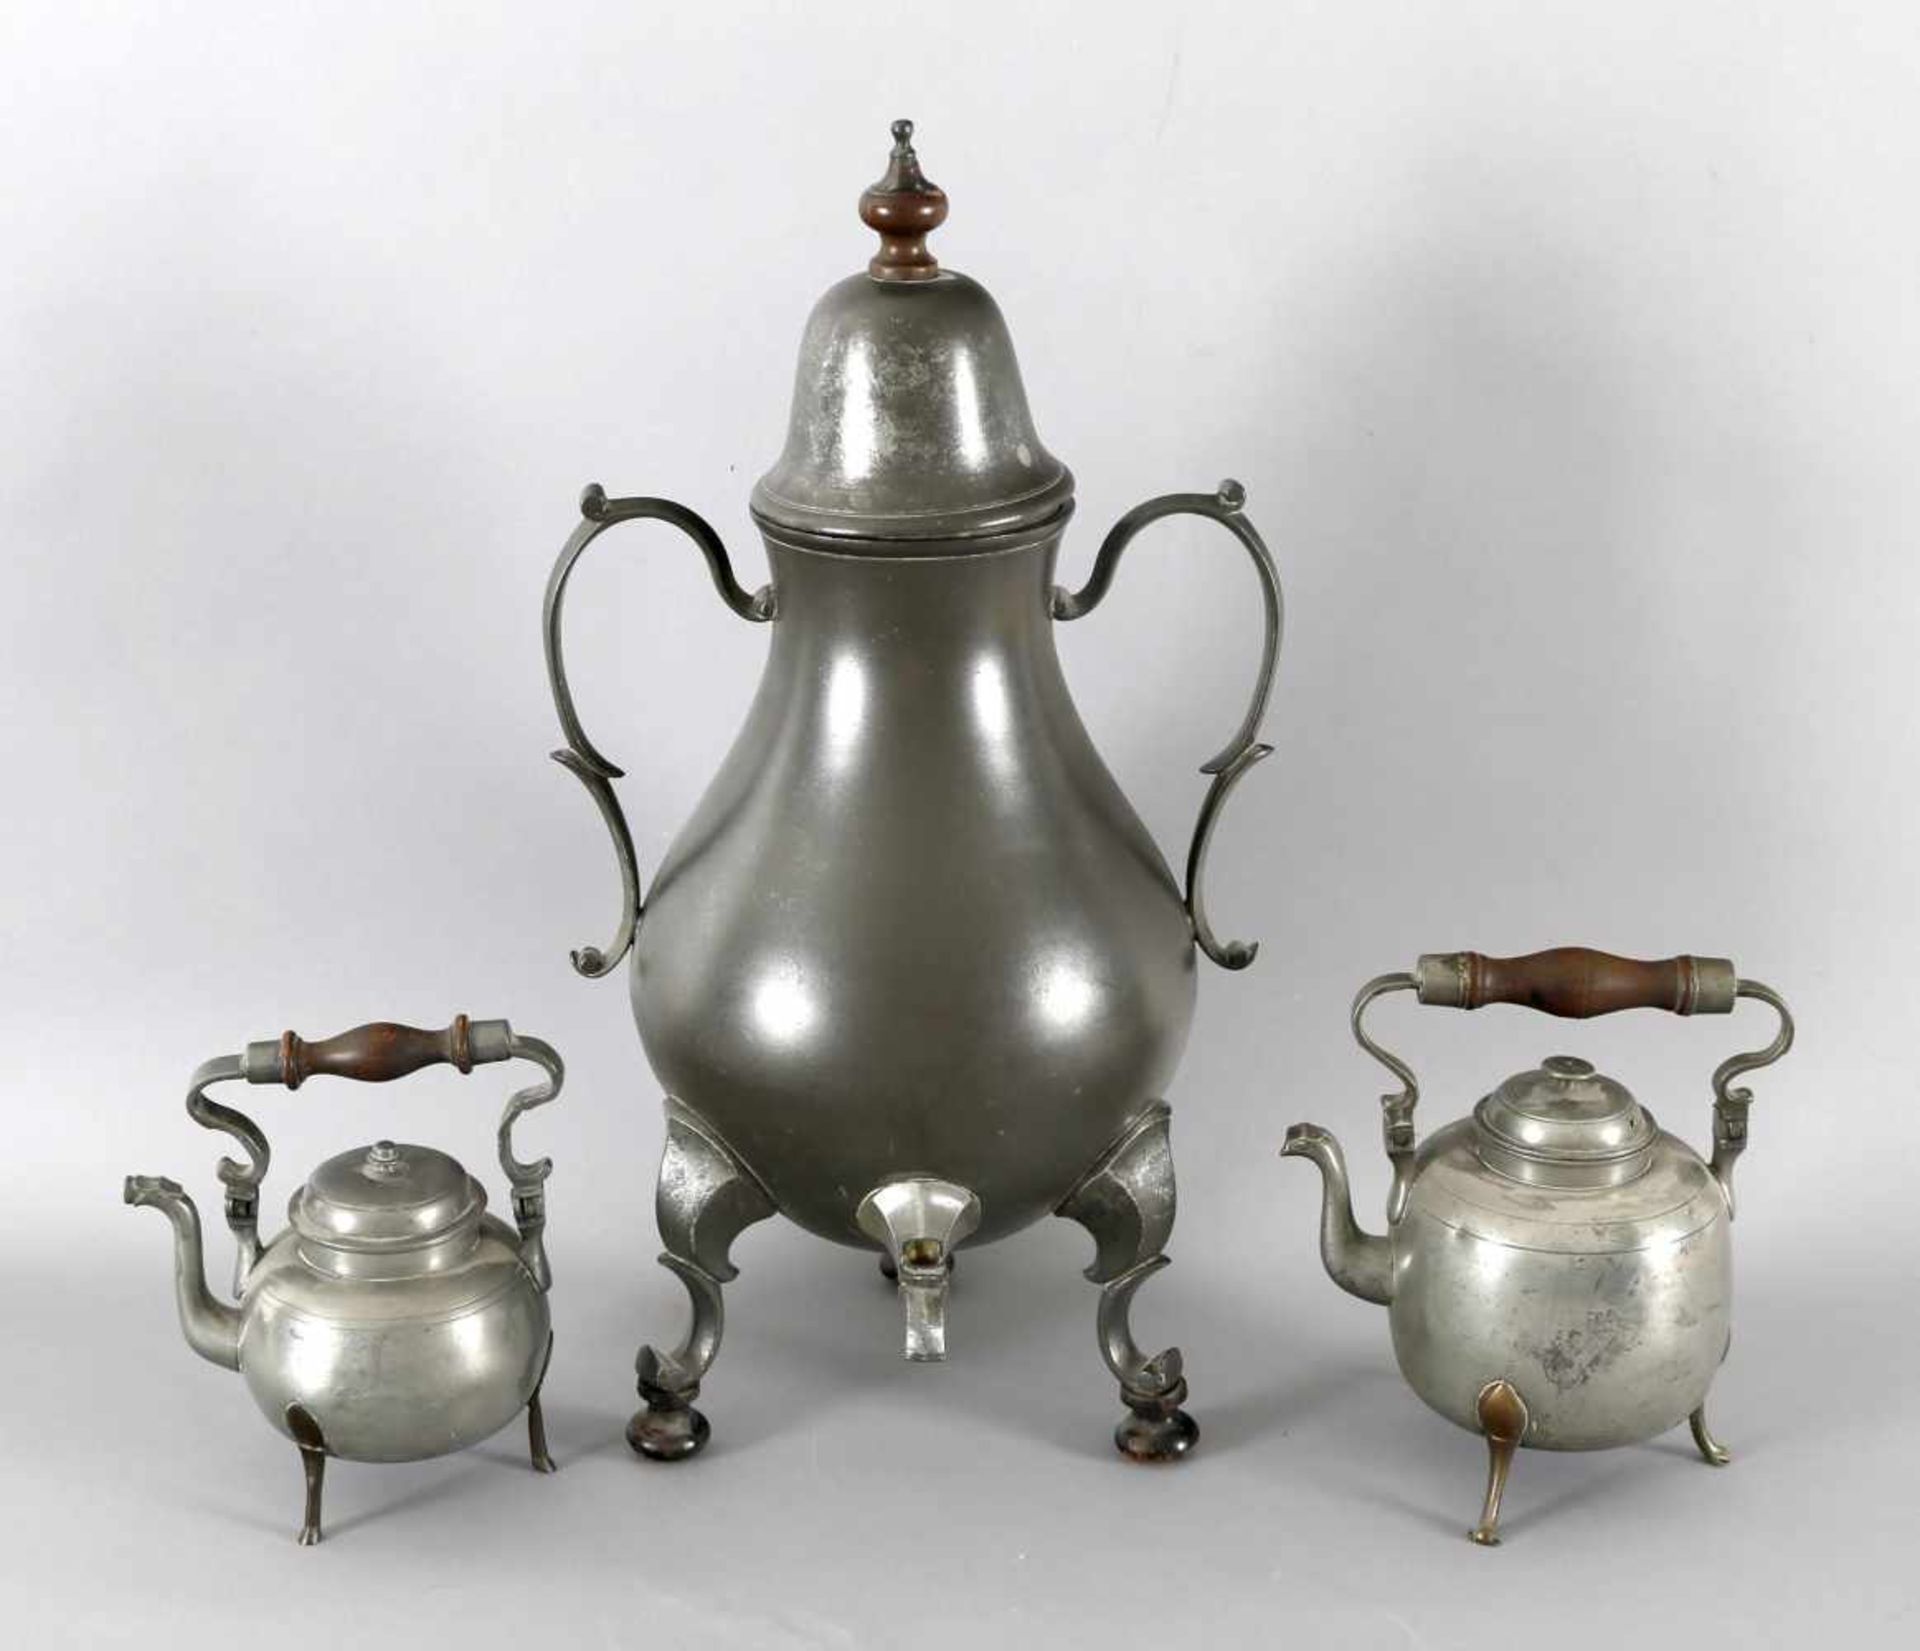 Dröppelminna und zwei Teekannen aus Zinn, deutsch, um 1780-1800